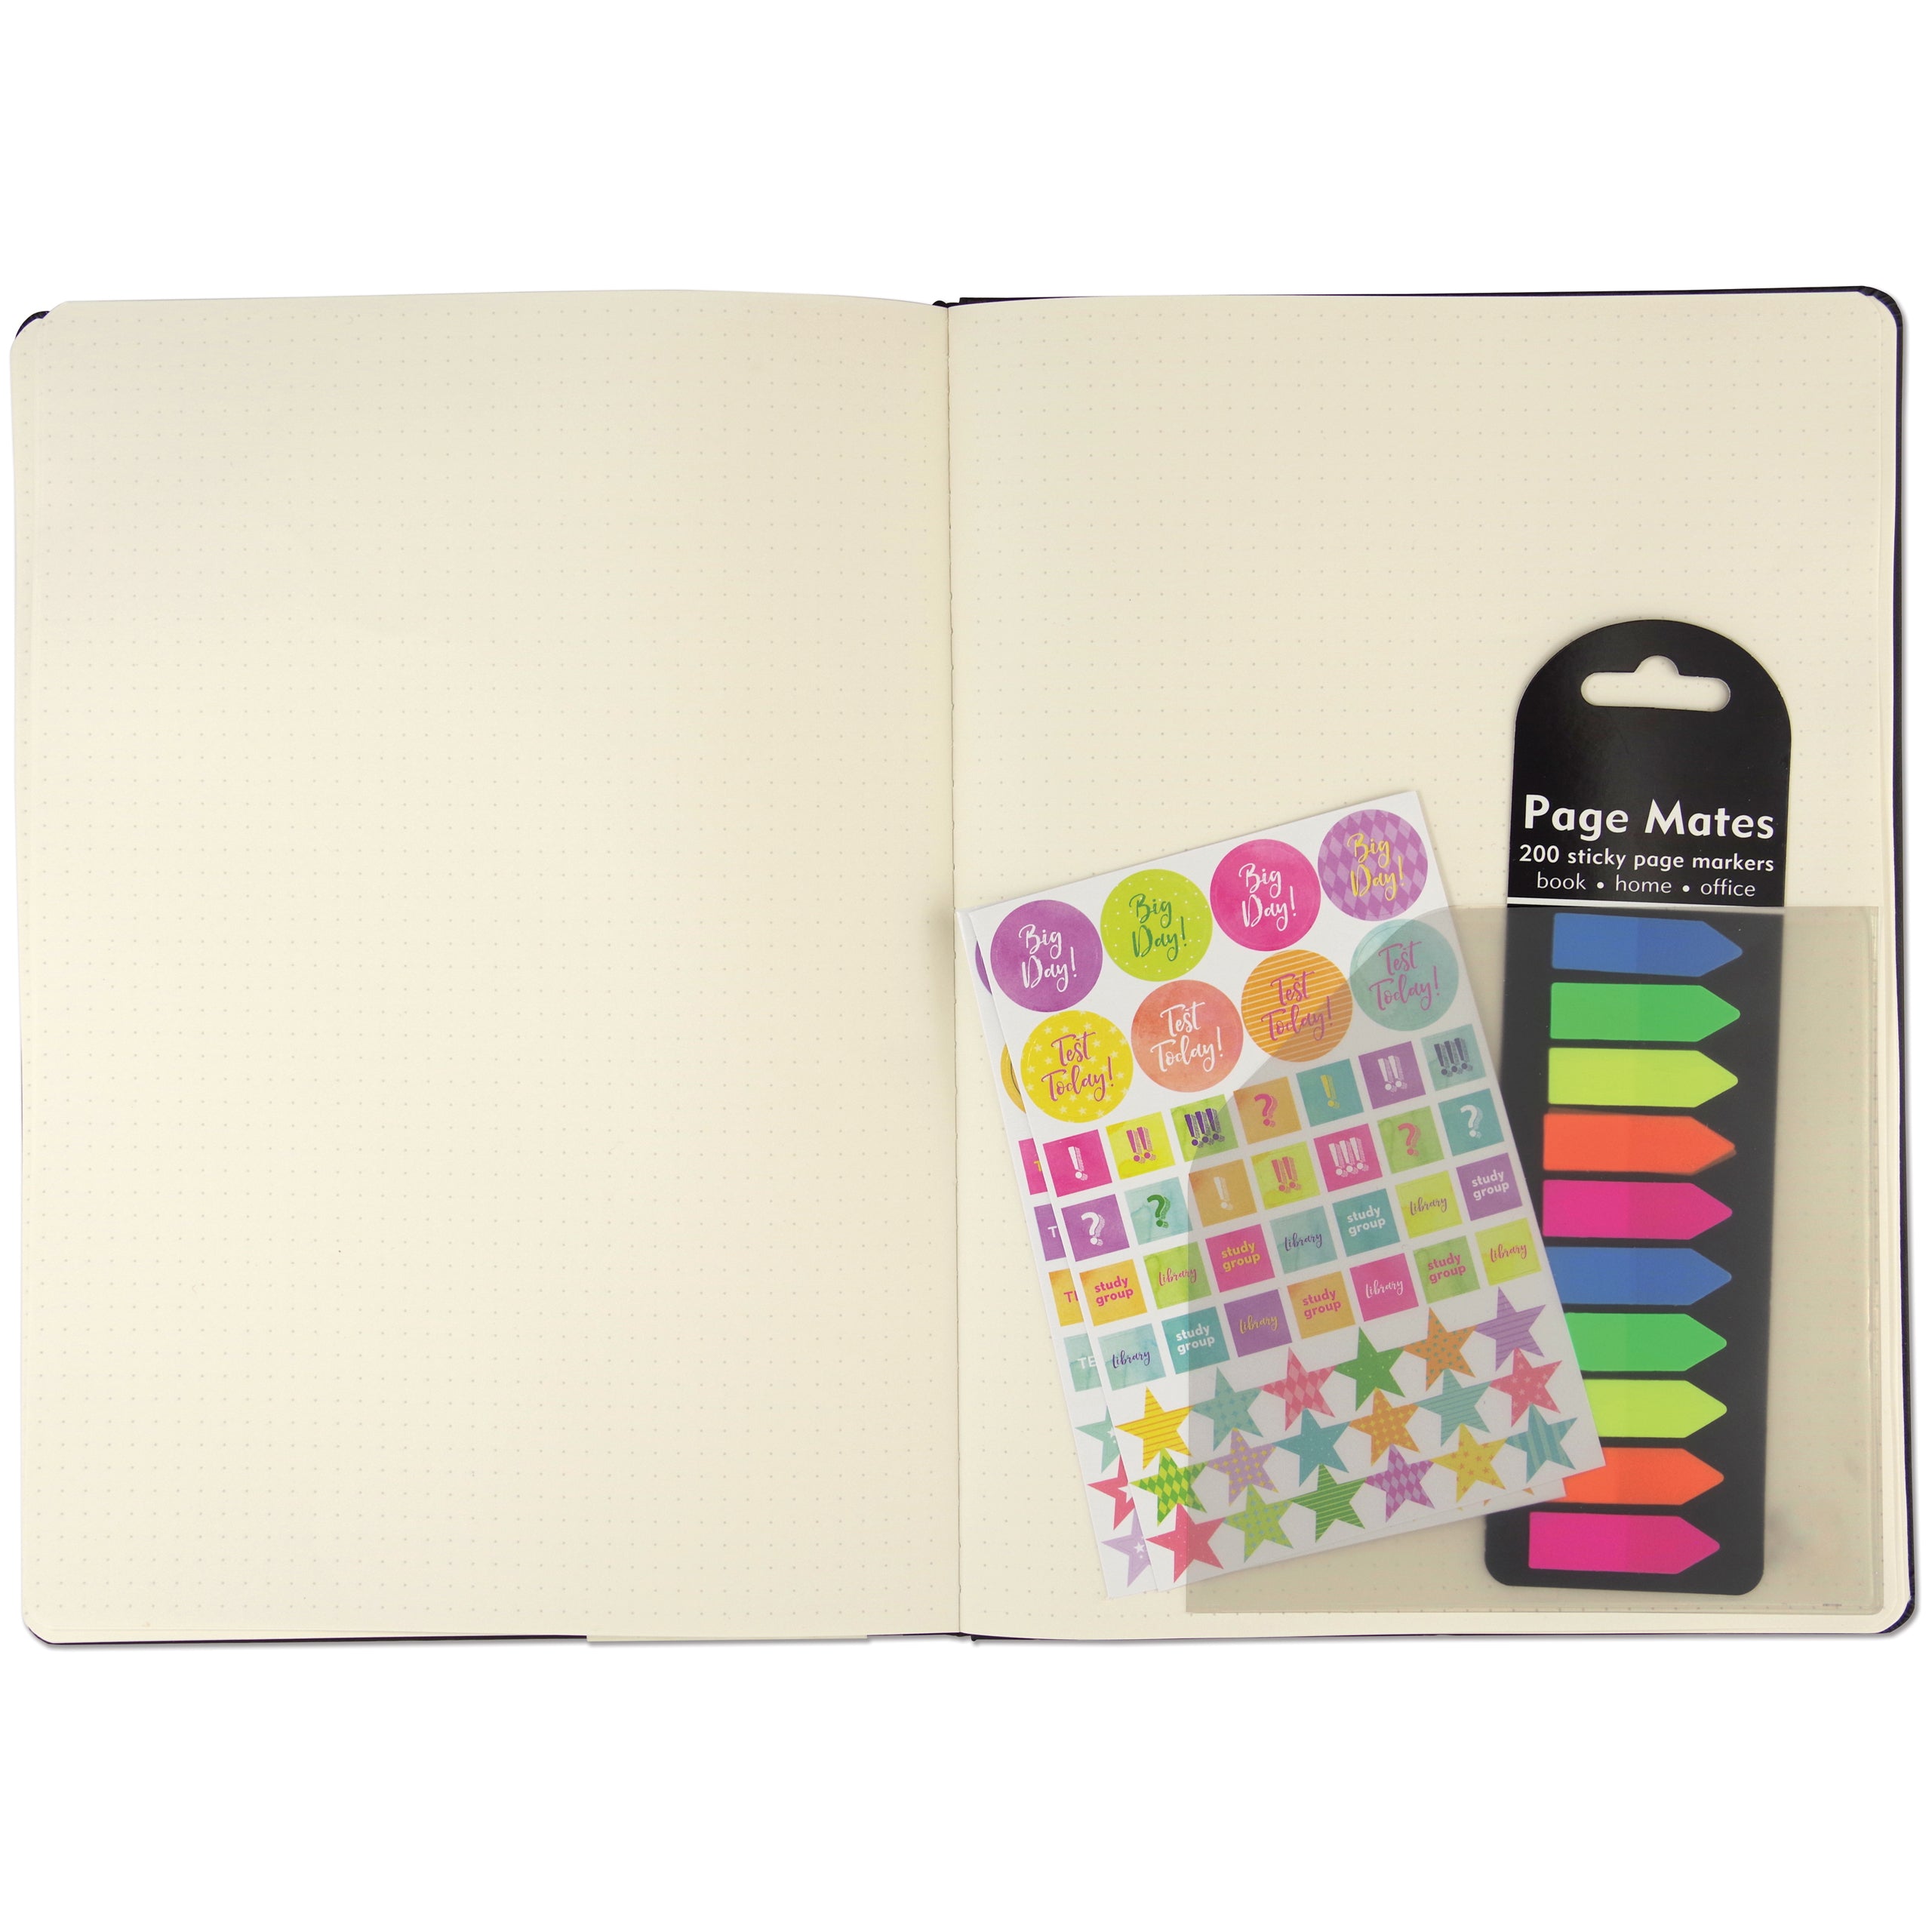 Adhesive Vinyl Pockets for Journals - Set of 6 - Paper Kooka